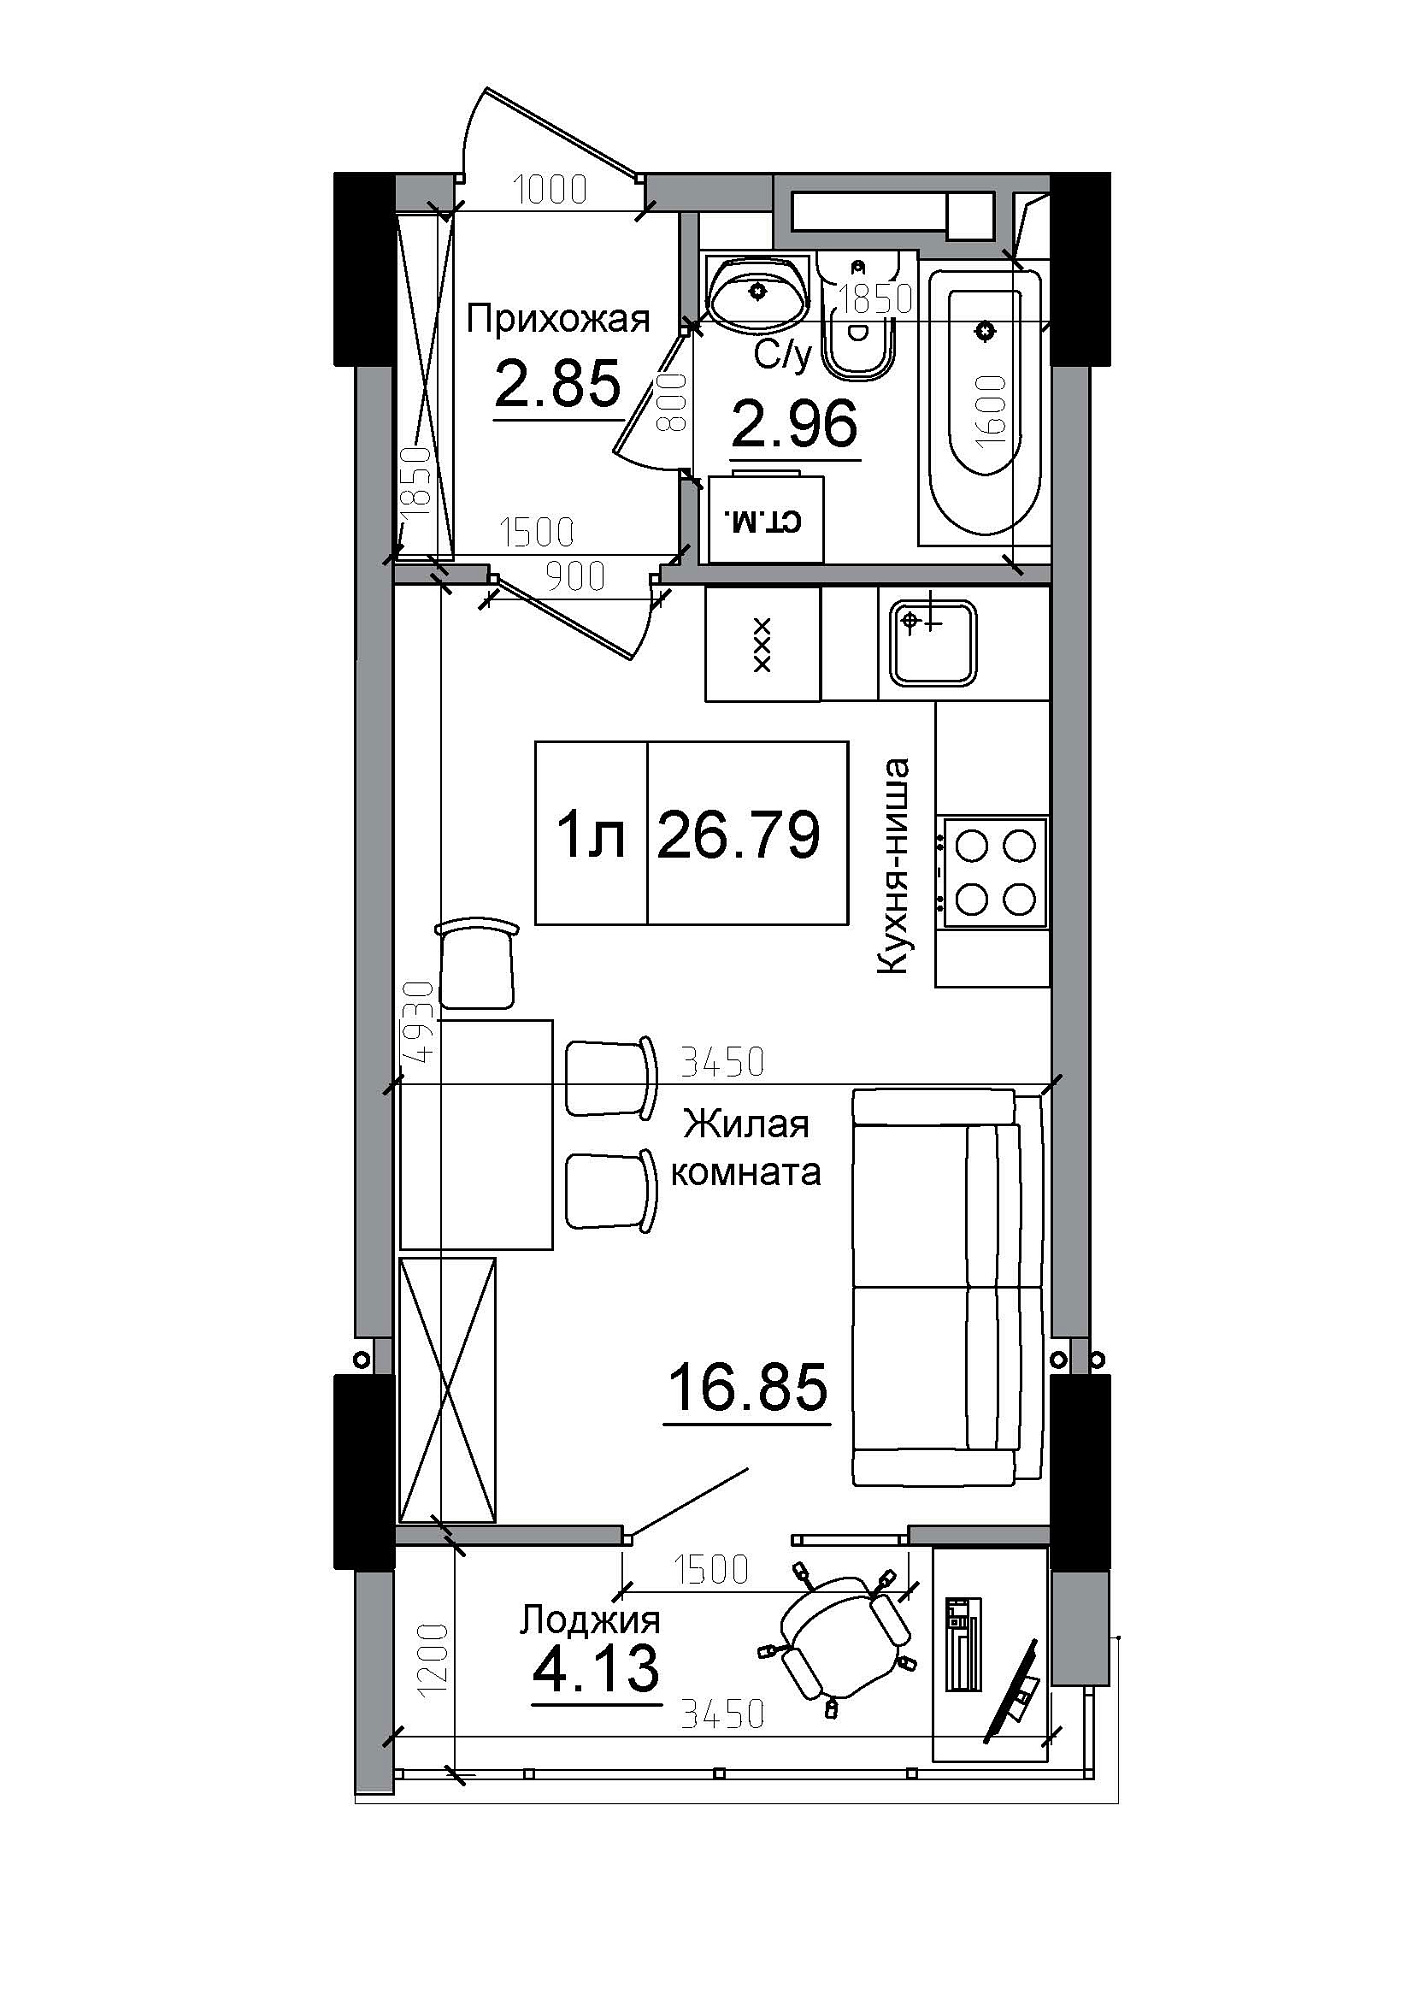 Planning Smart flats area 26.79m2, AB-12-09/00014.